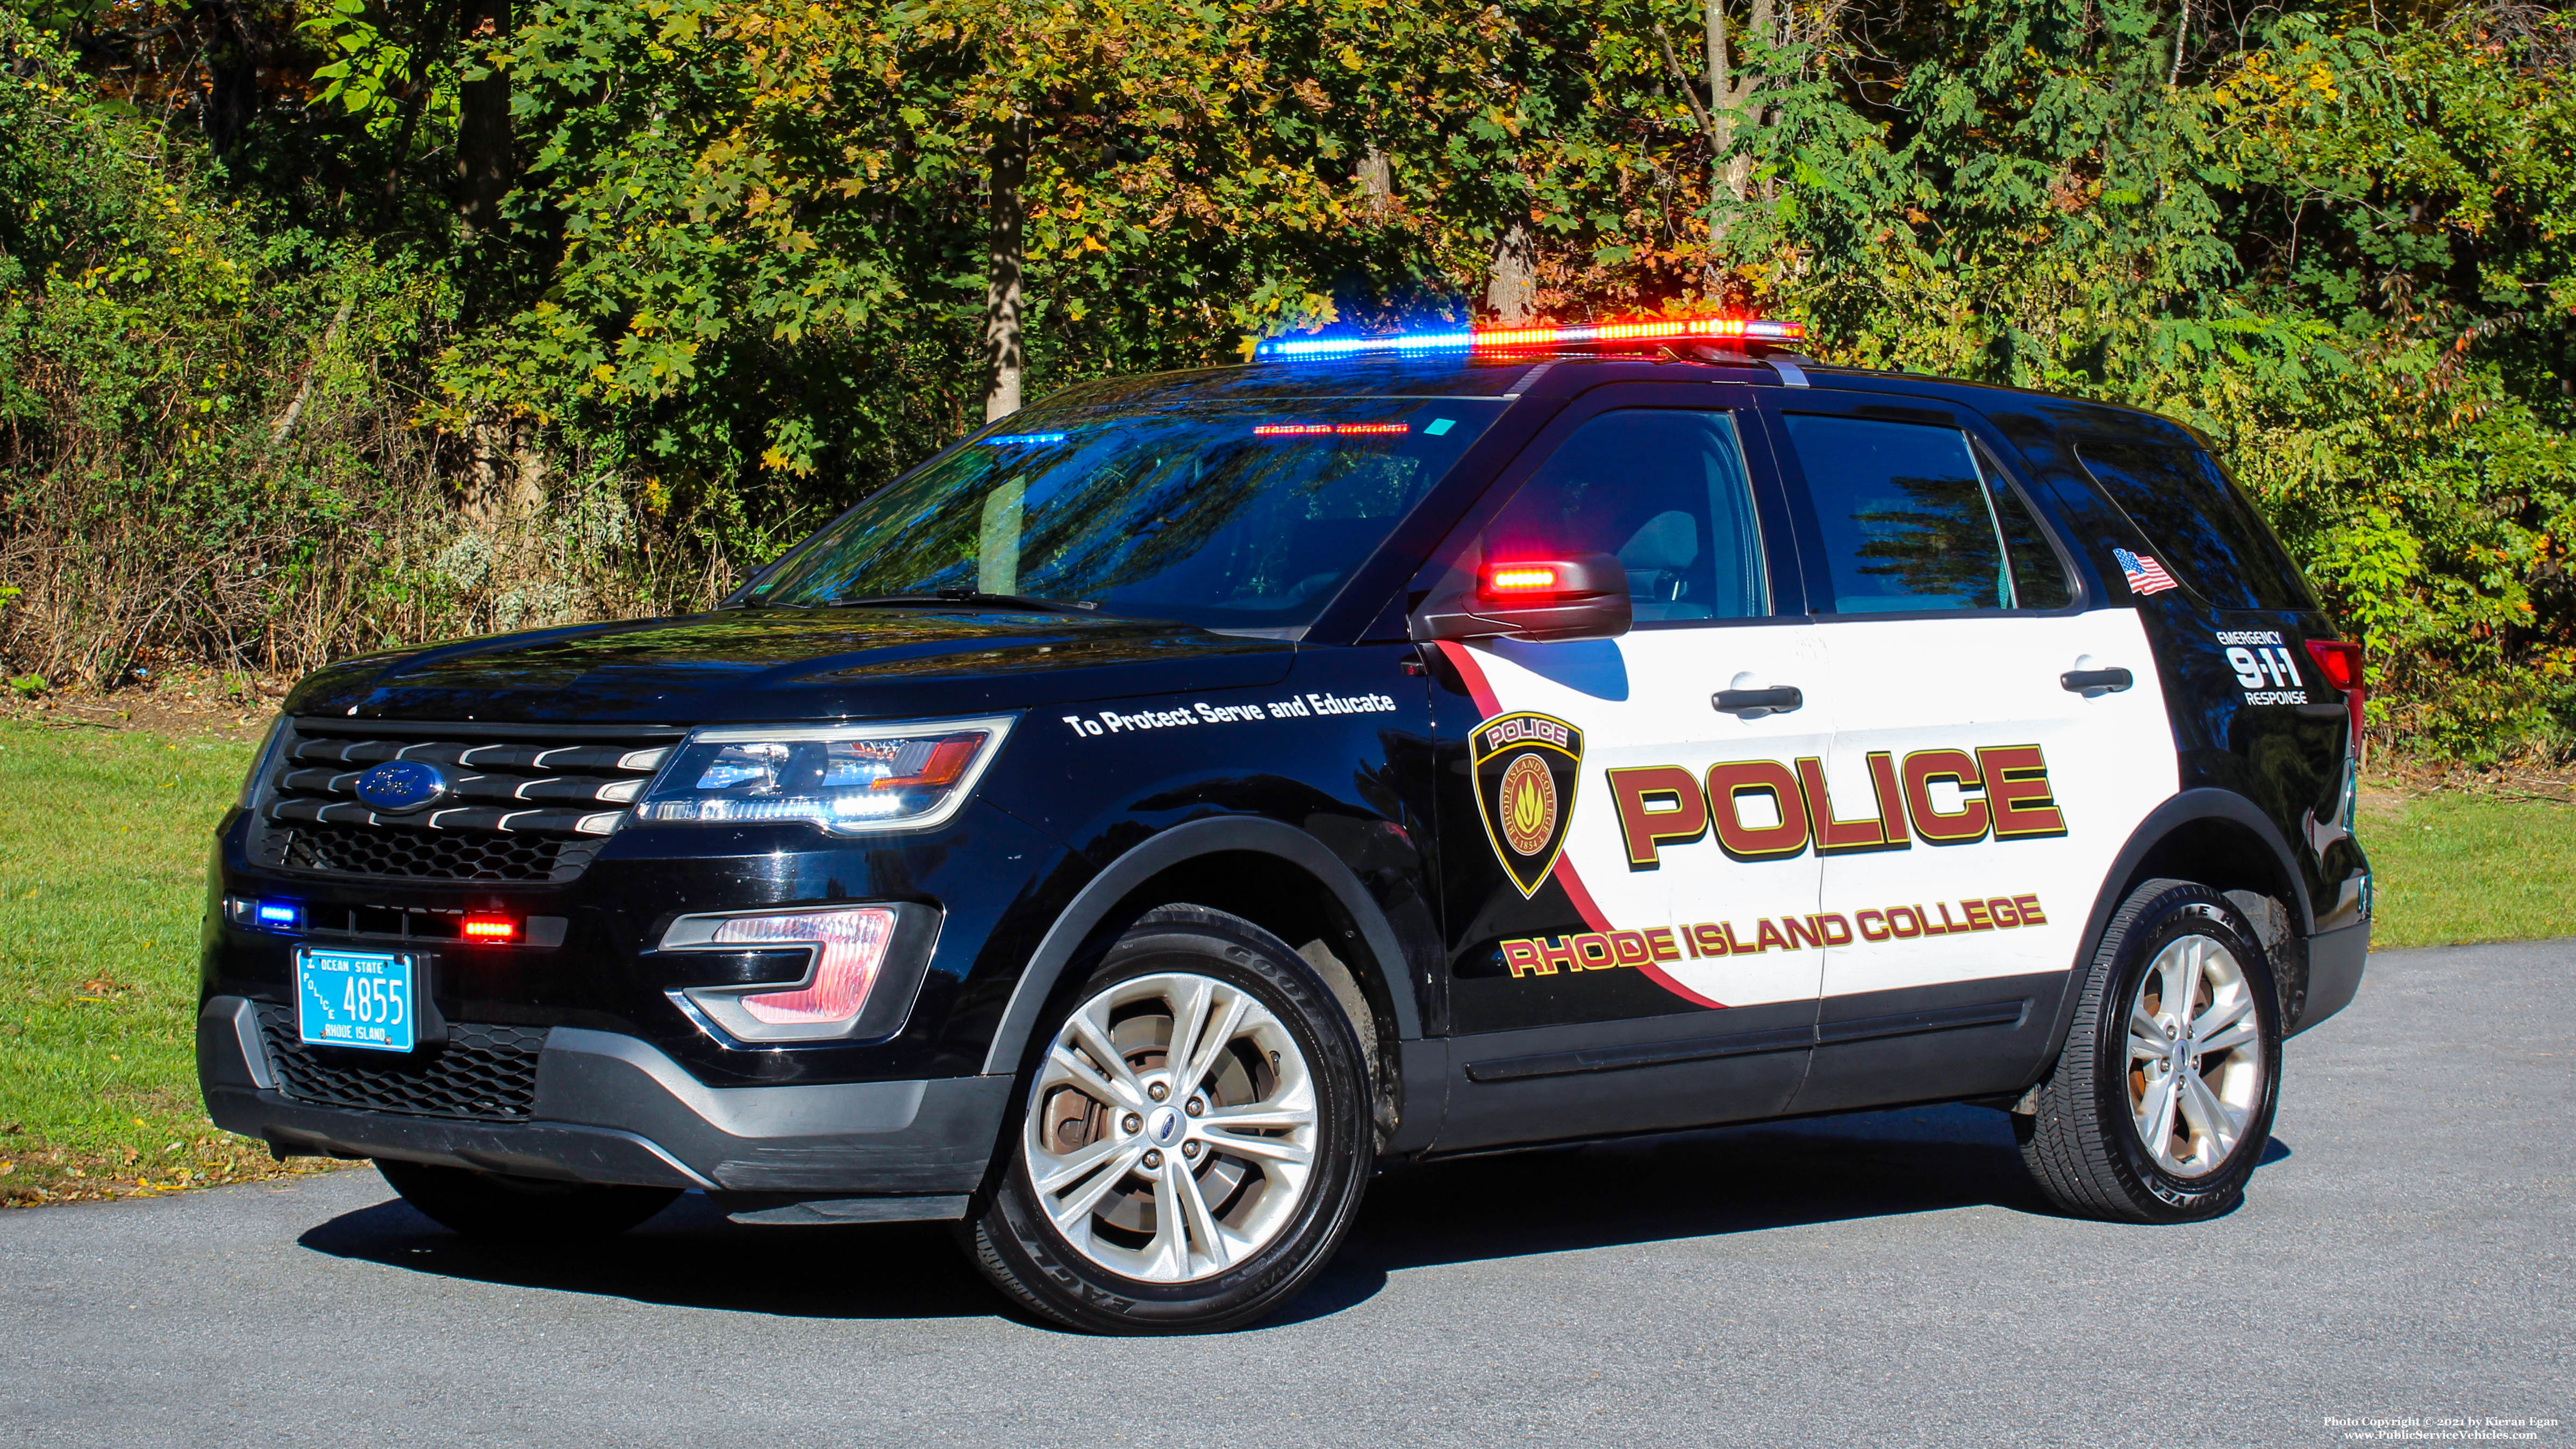 A photo  of Rhode Island College Police
            Cruiser 4855, a 2017-2018 Ford Police Interceptor Utility             taken by Kieran Egan